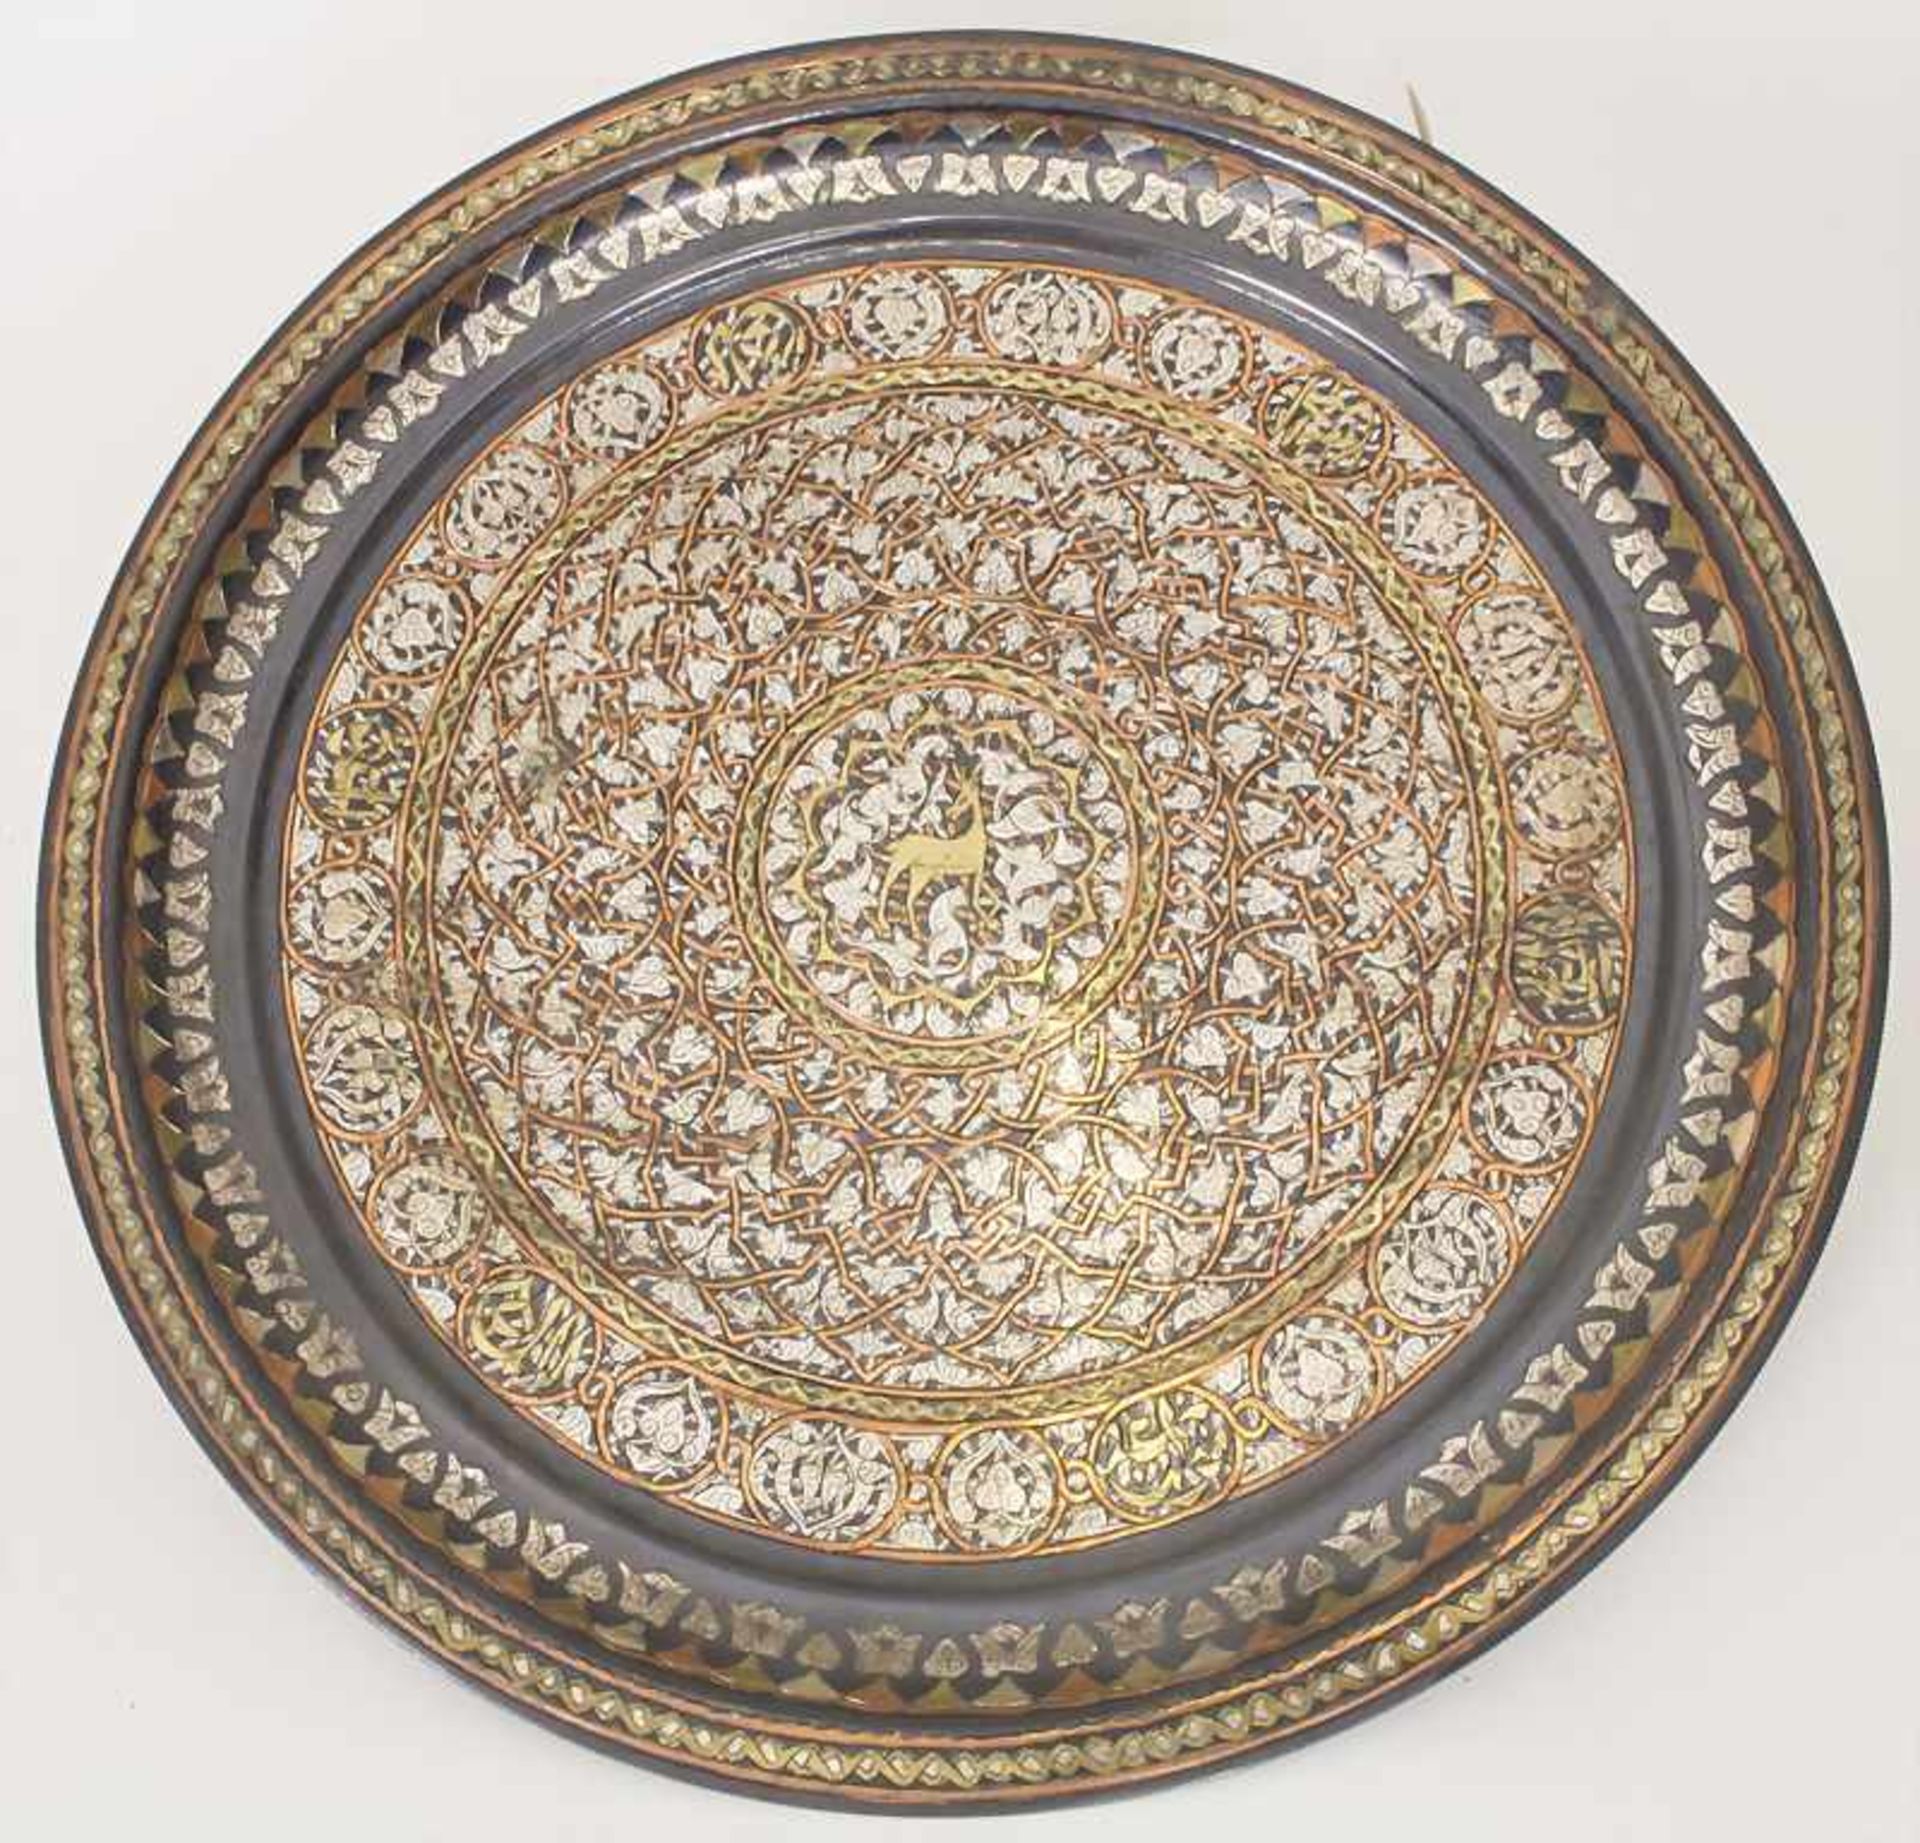 Teetablett mit Ornamentdekor / A tea tray with ornaments, Nordafrika, 20. Jh.Material: Treibarbeit